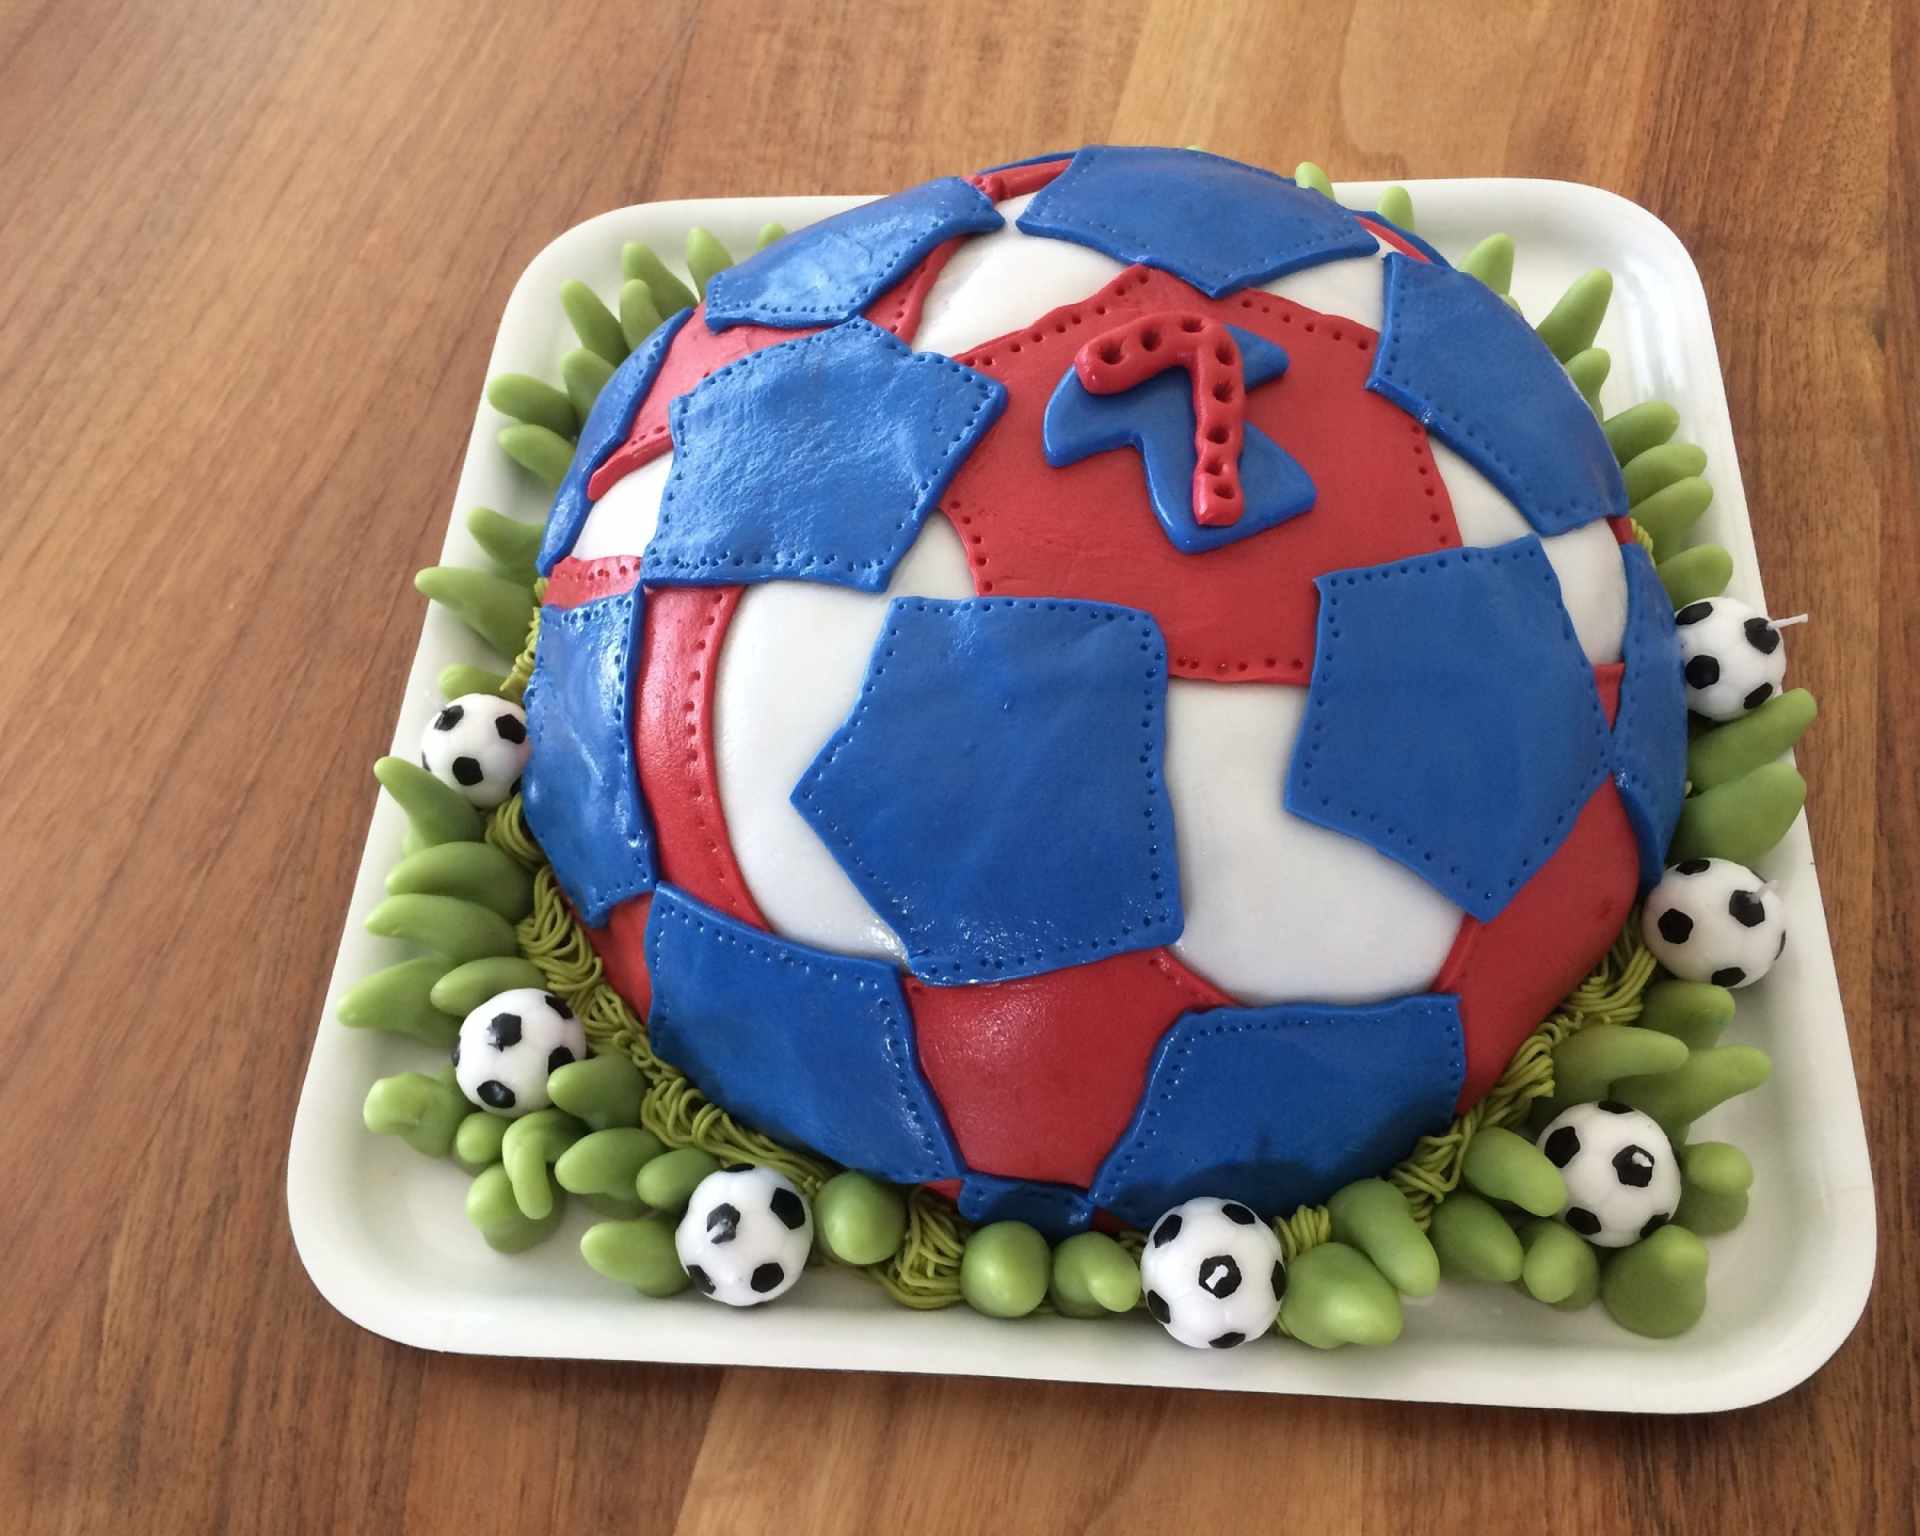 Futbalová torta